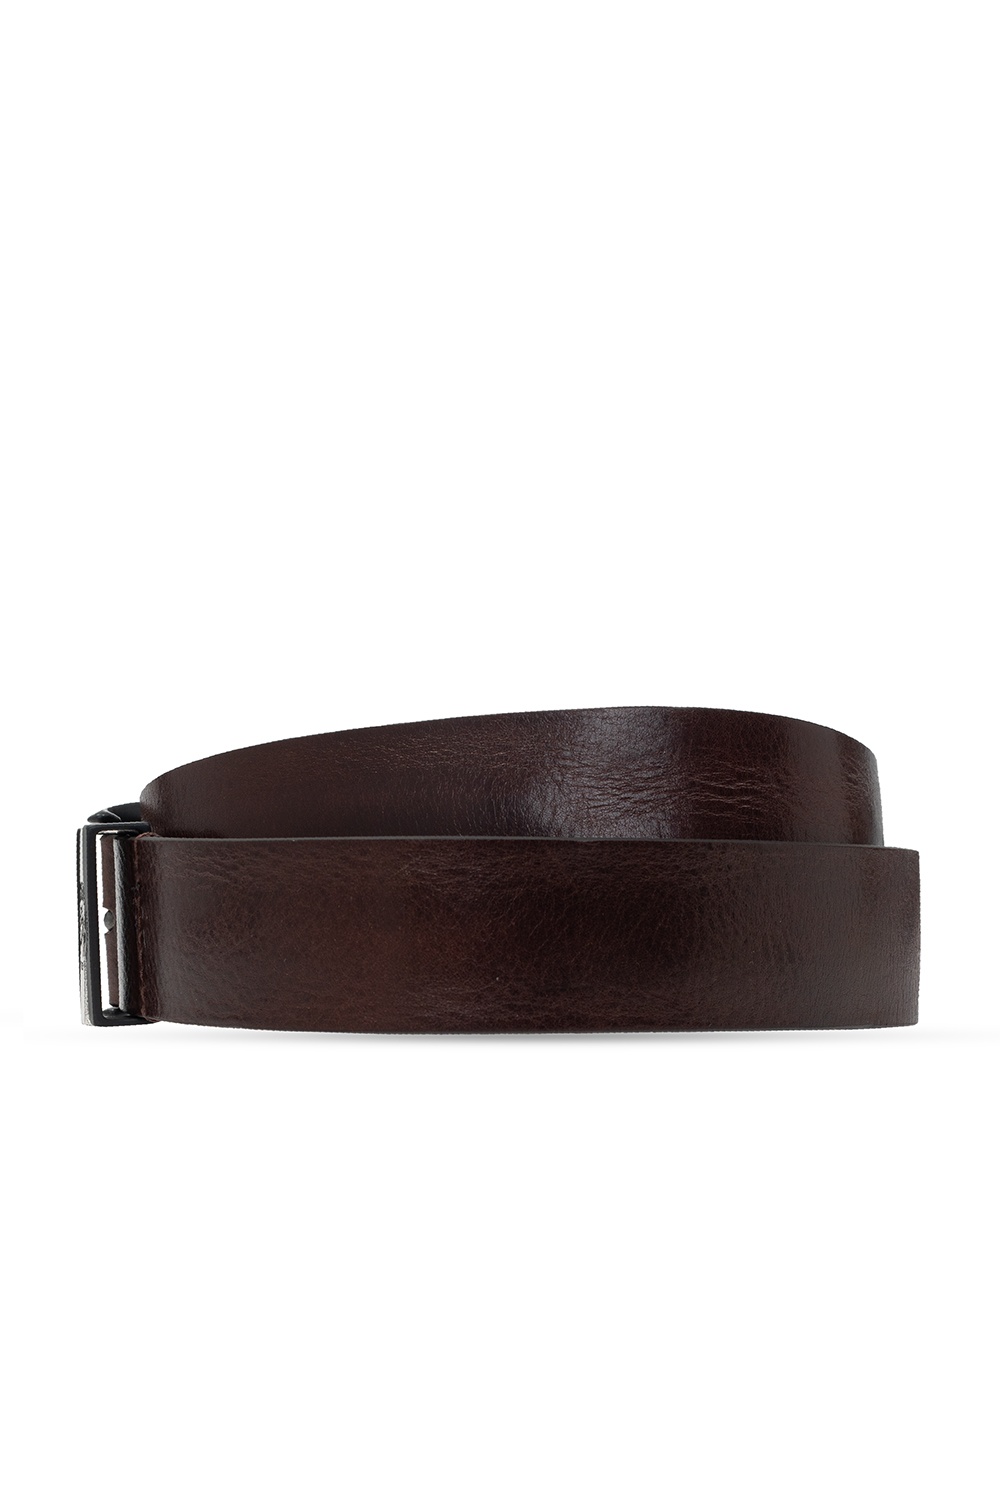 Diesel ‘B-Hidden’ leather belt